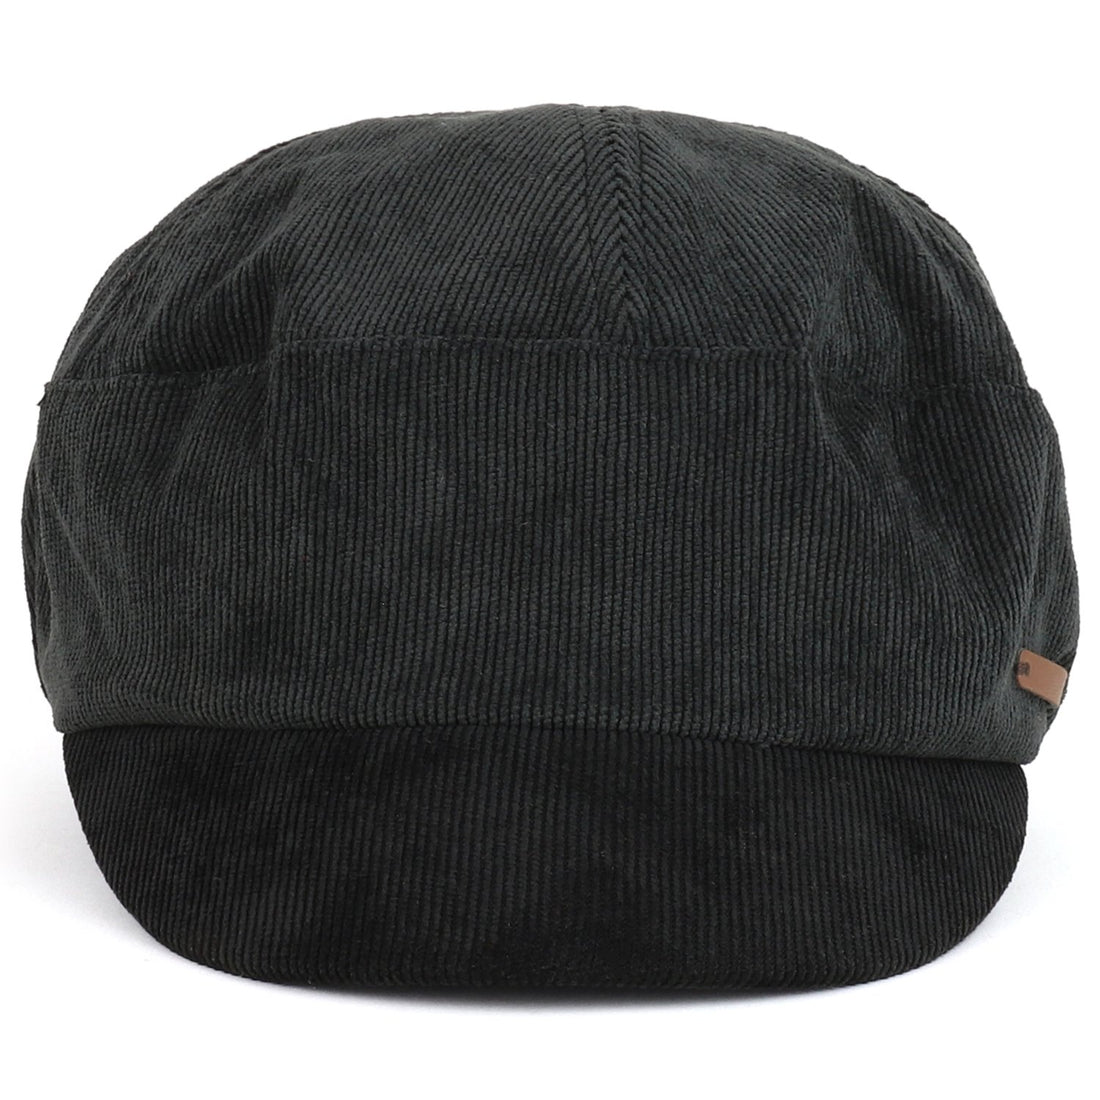 Trendy Apparel Shop Plain Corduroy Newsboy Style Cabbie Lieutenant Hat - Black